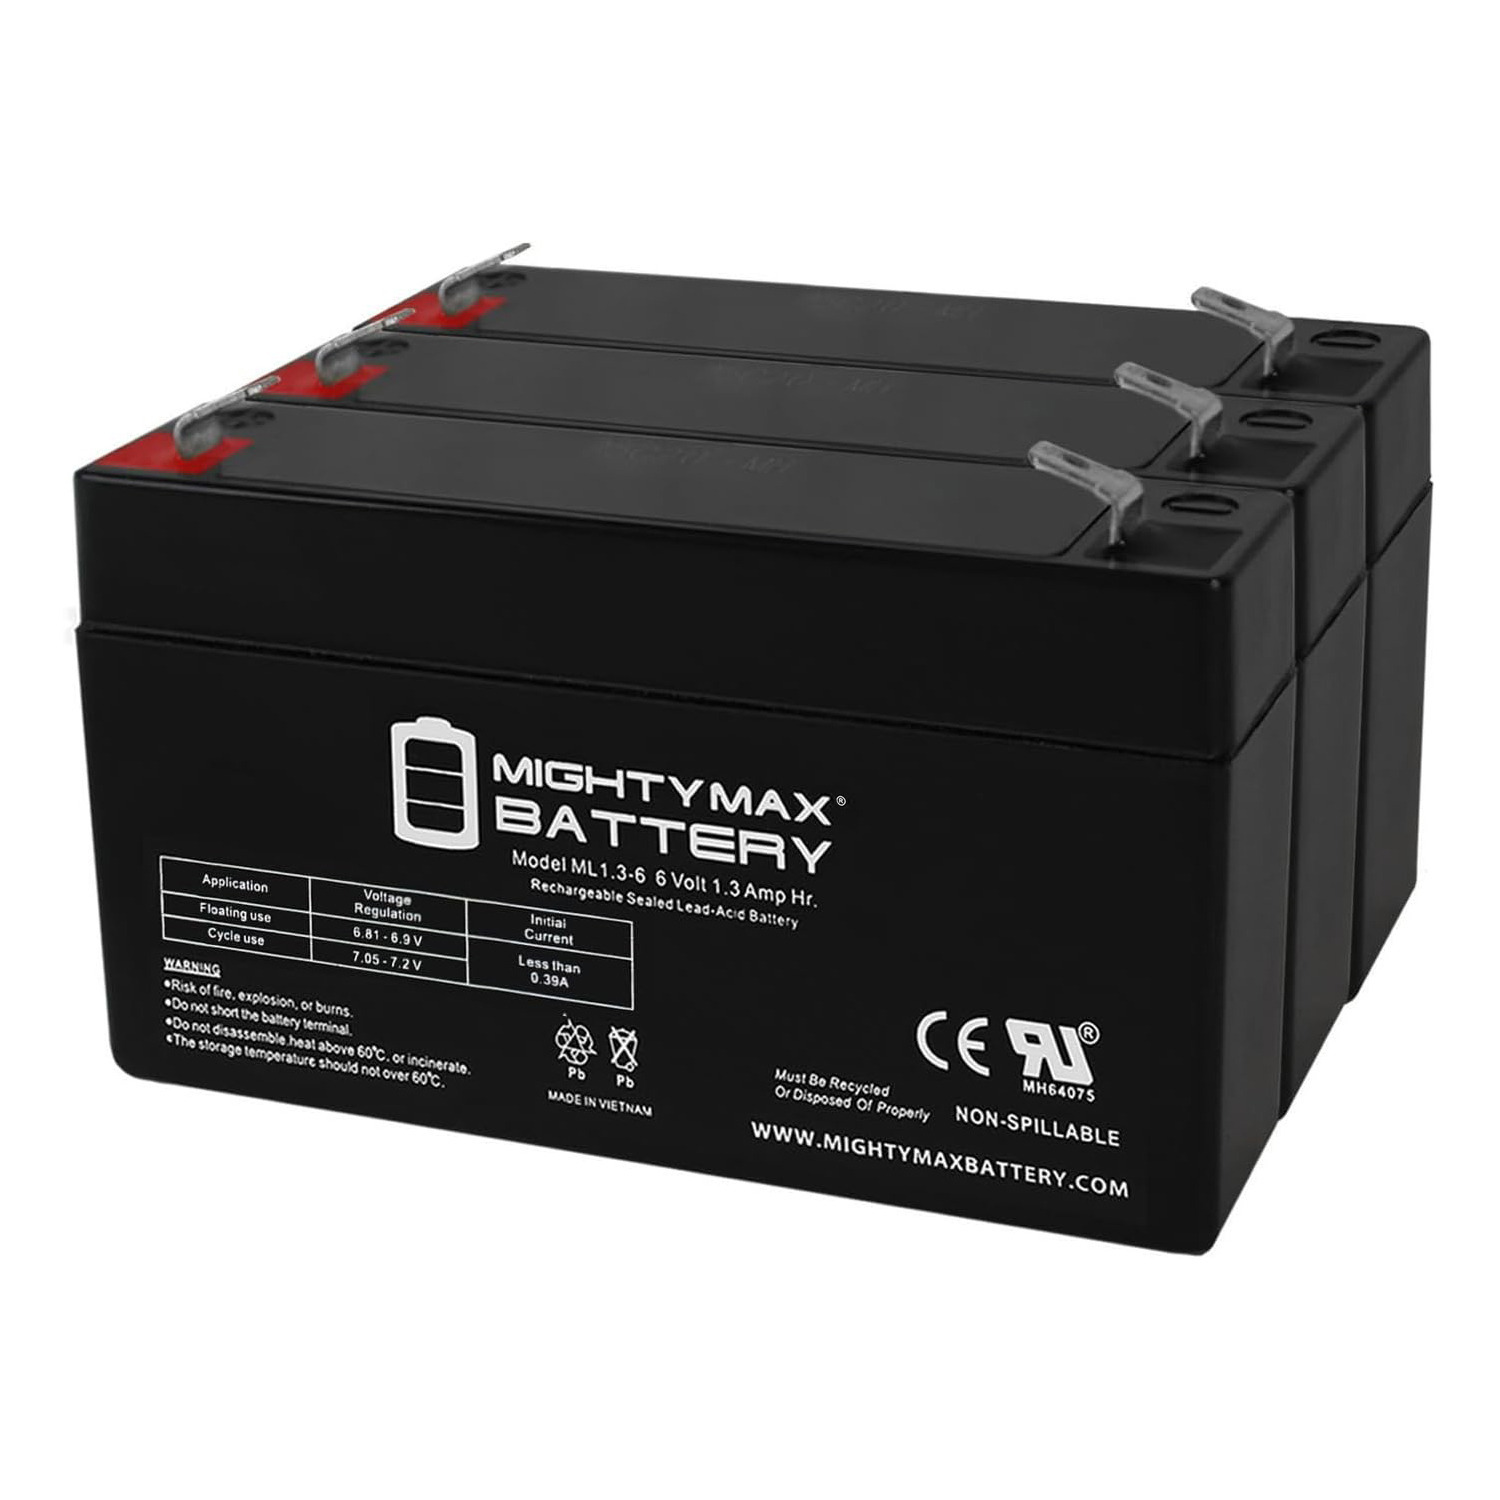 6V 1.3Ah Sonnenschein 7190182 Emergency Light Battery - 3 Pack